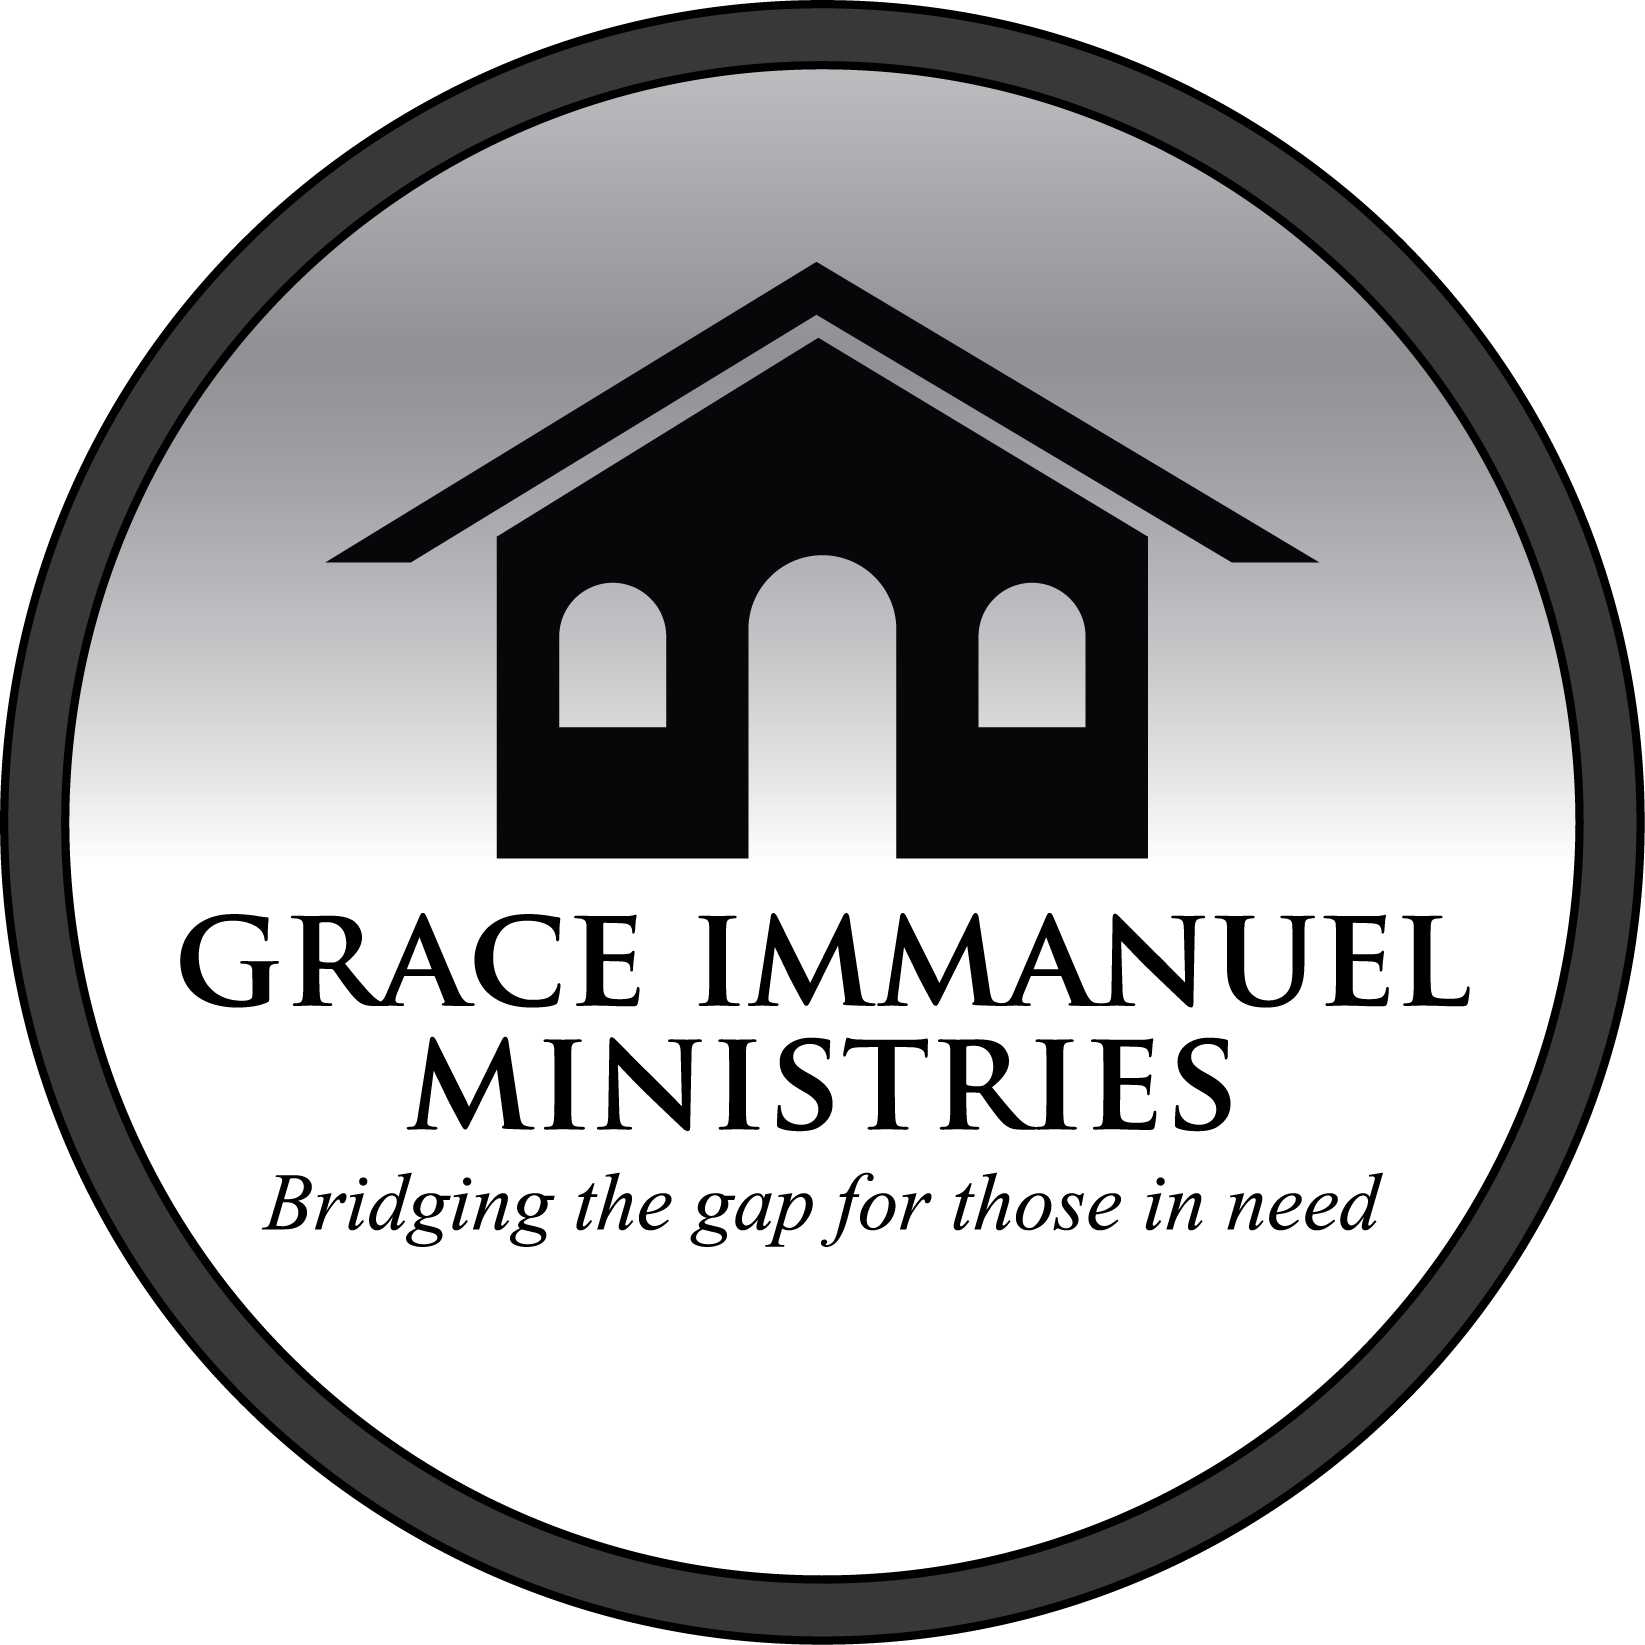 Grace Immanuel Ministries